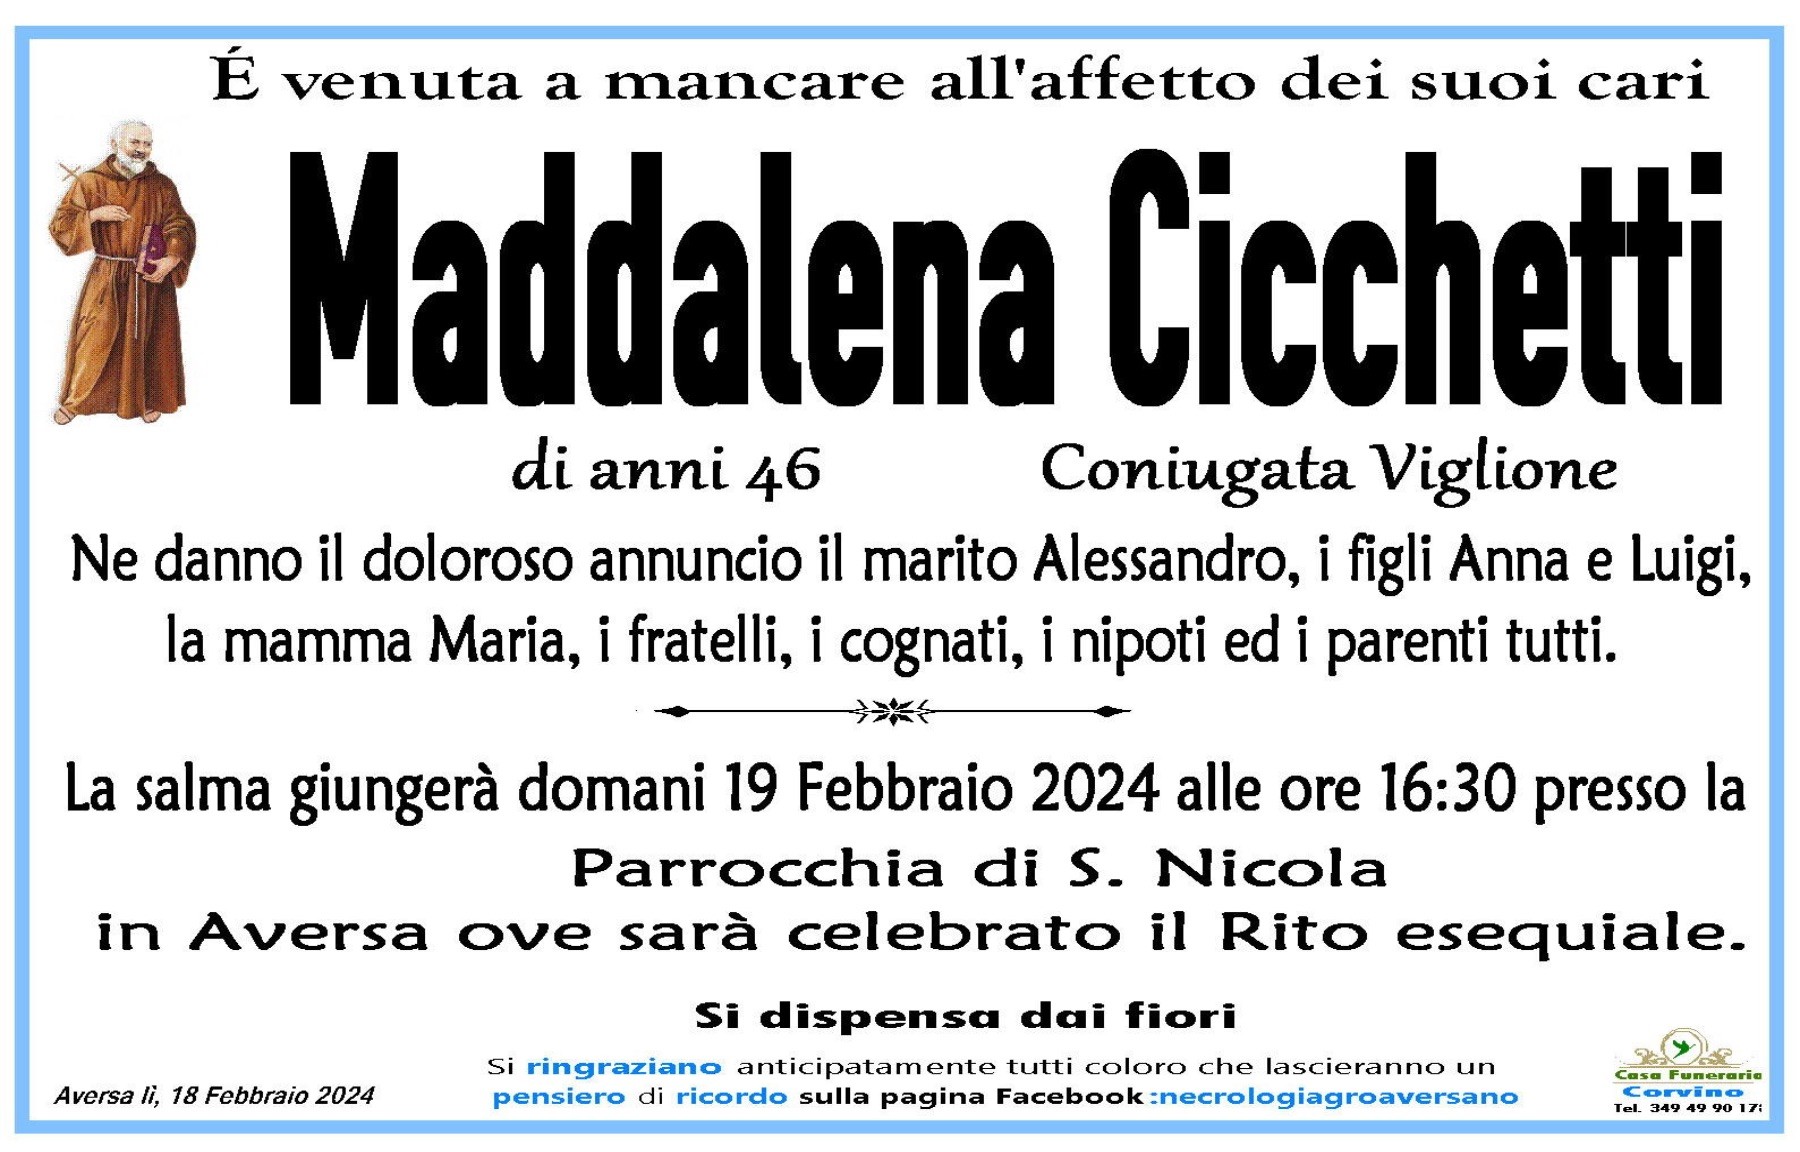 Maddalena Cicchetti